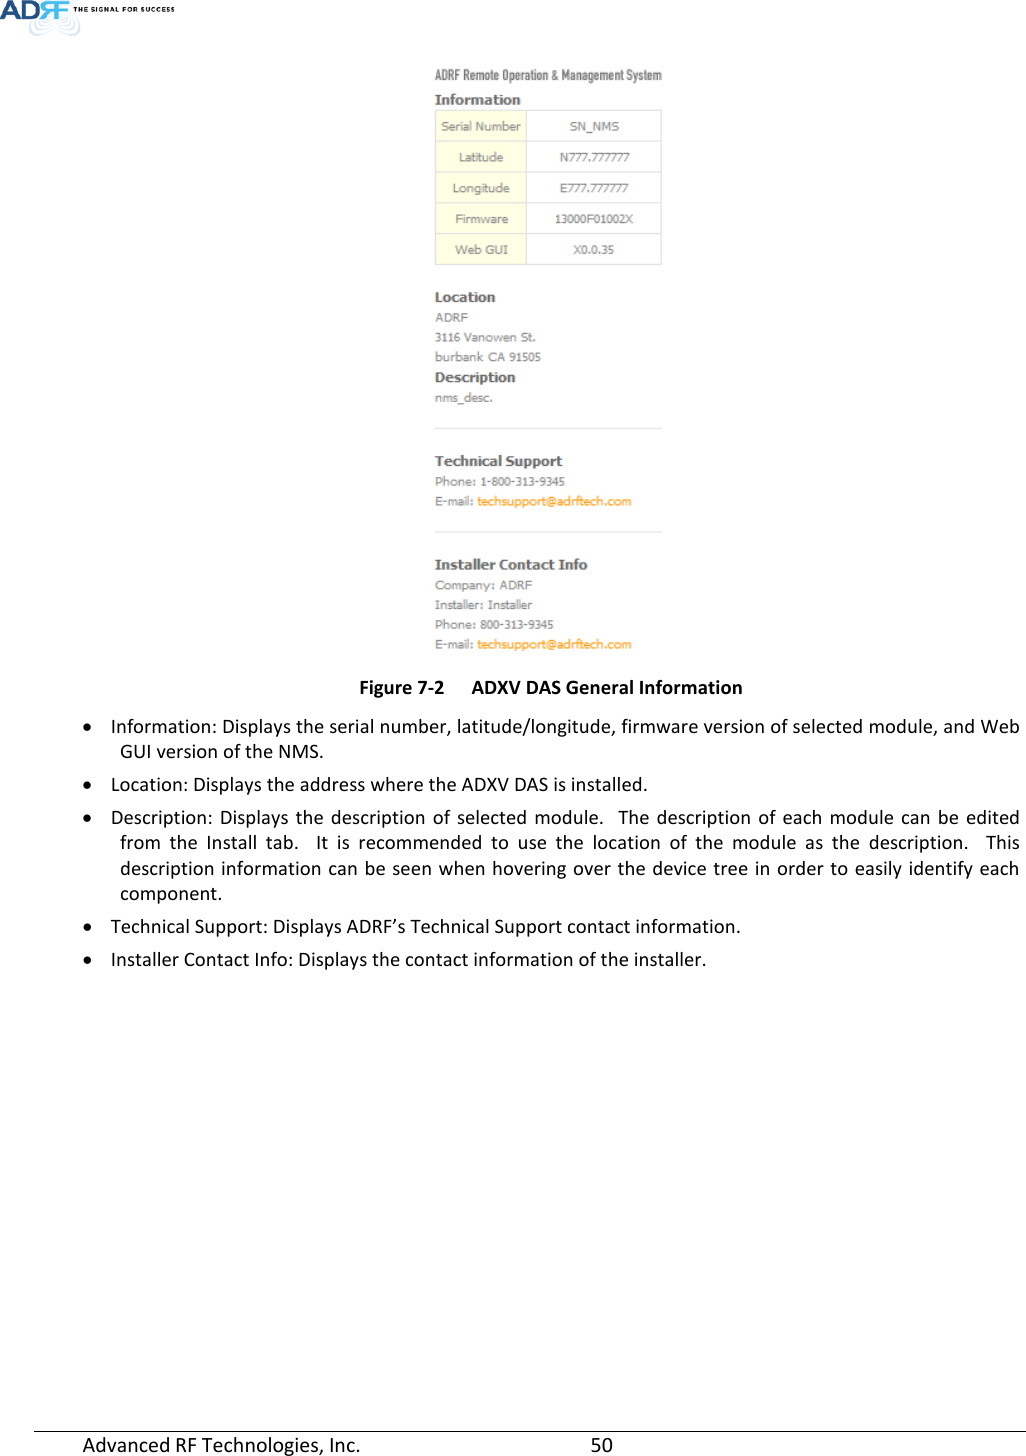 Page 50 of ADRF KOREA ADXV-R-336 DAS (Distributed Antenna System) User Manual ADXV DAS